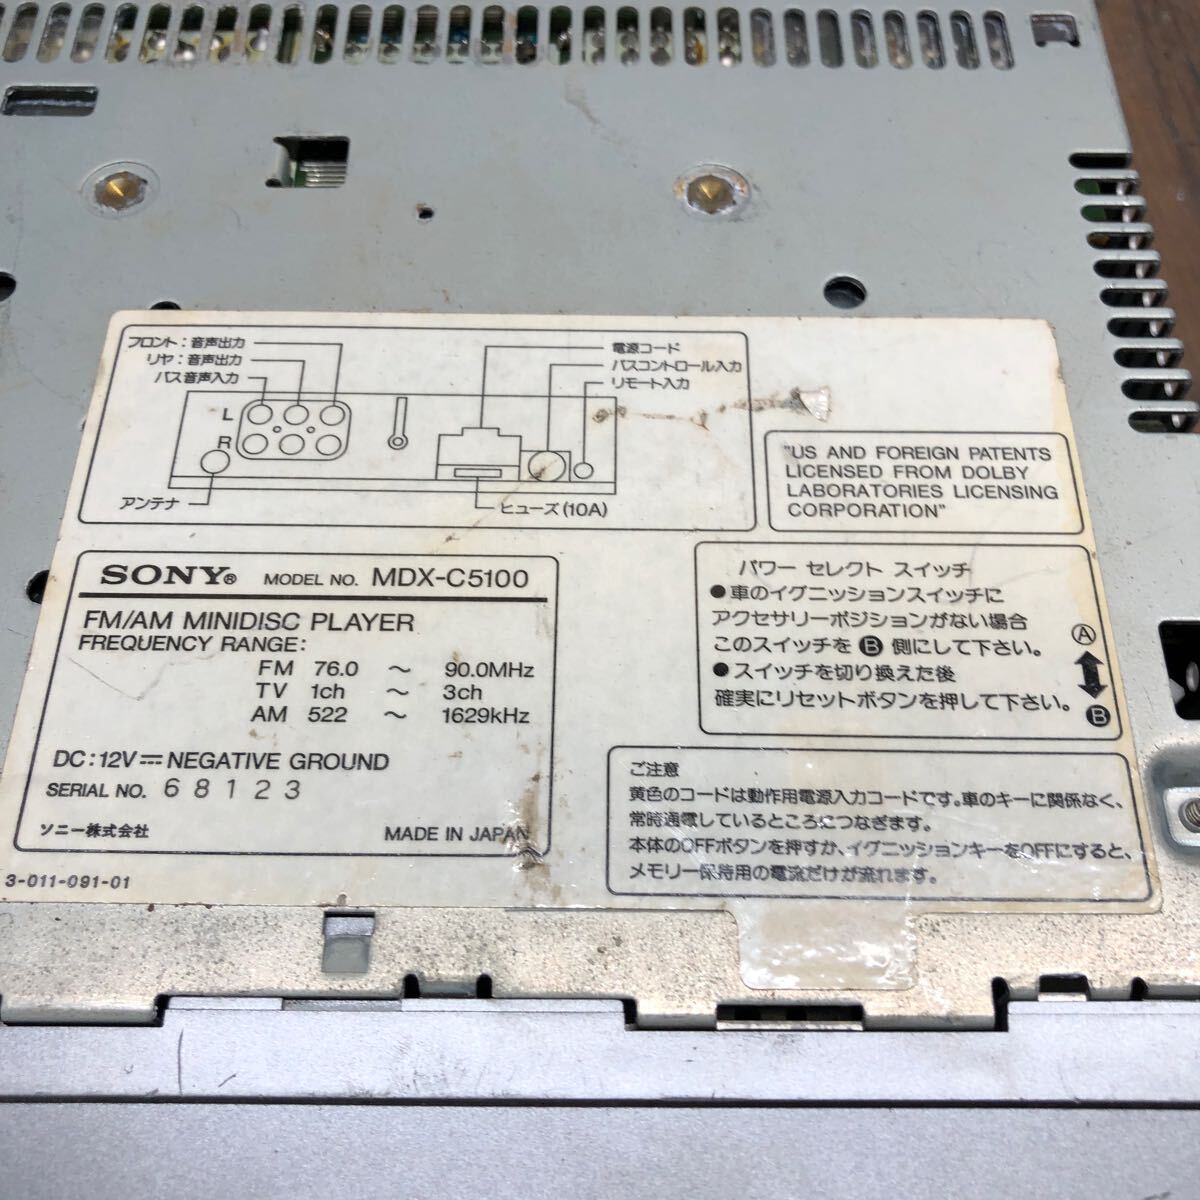 AV3-360 супер-скидка машина стерео MD плеер SONY MDX-C5100 68123 MD FM/AM электризация не проверка Junk 